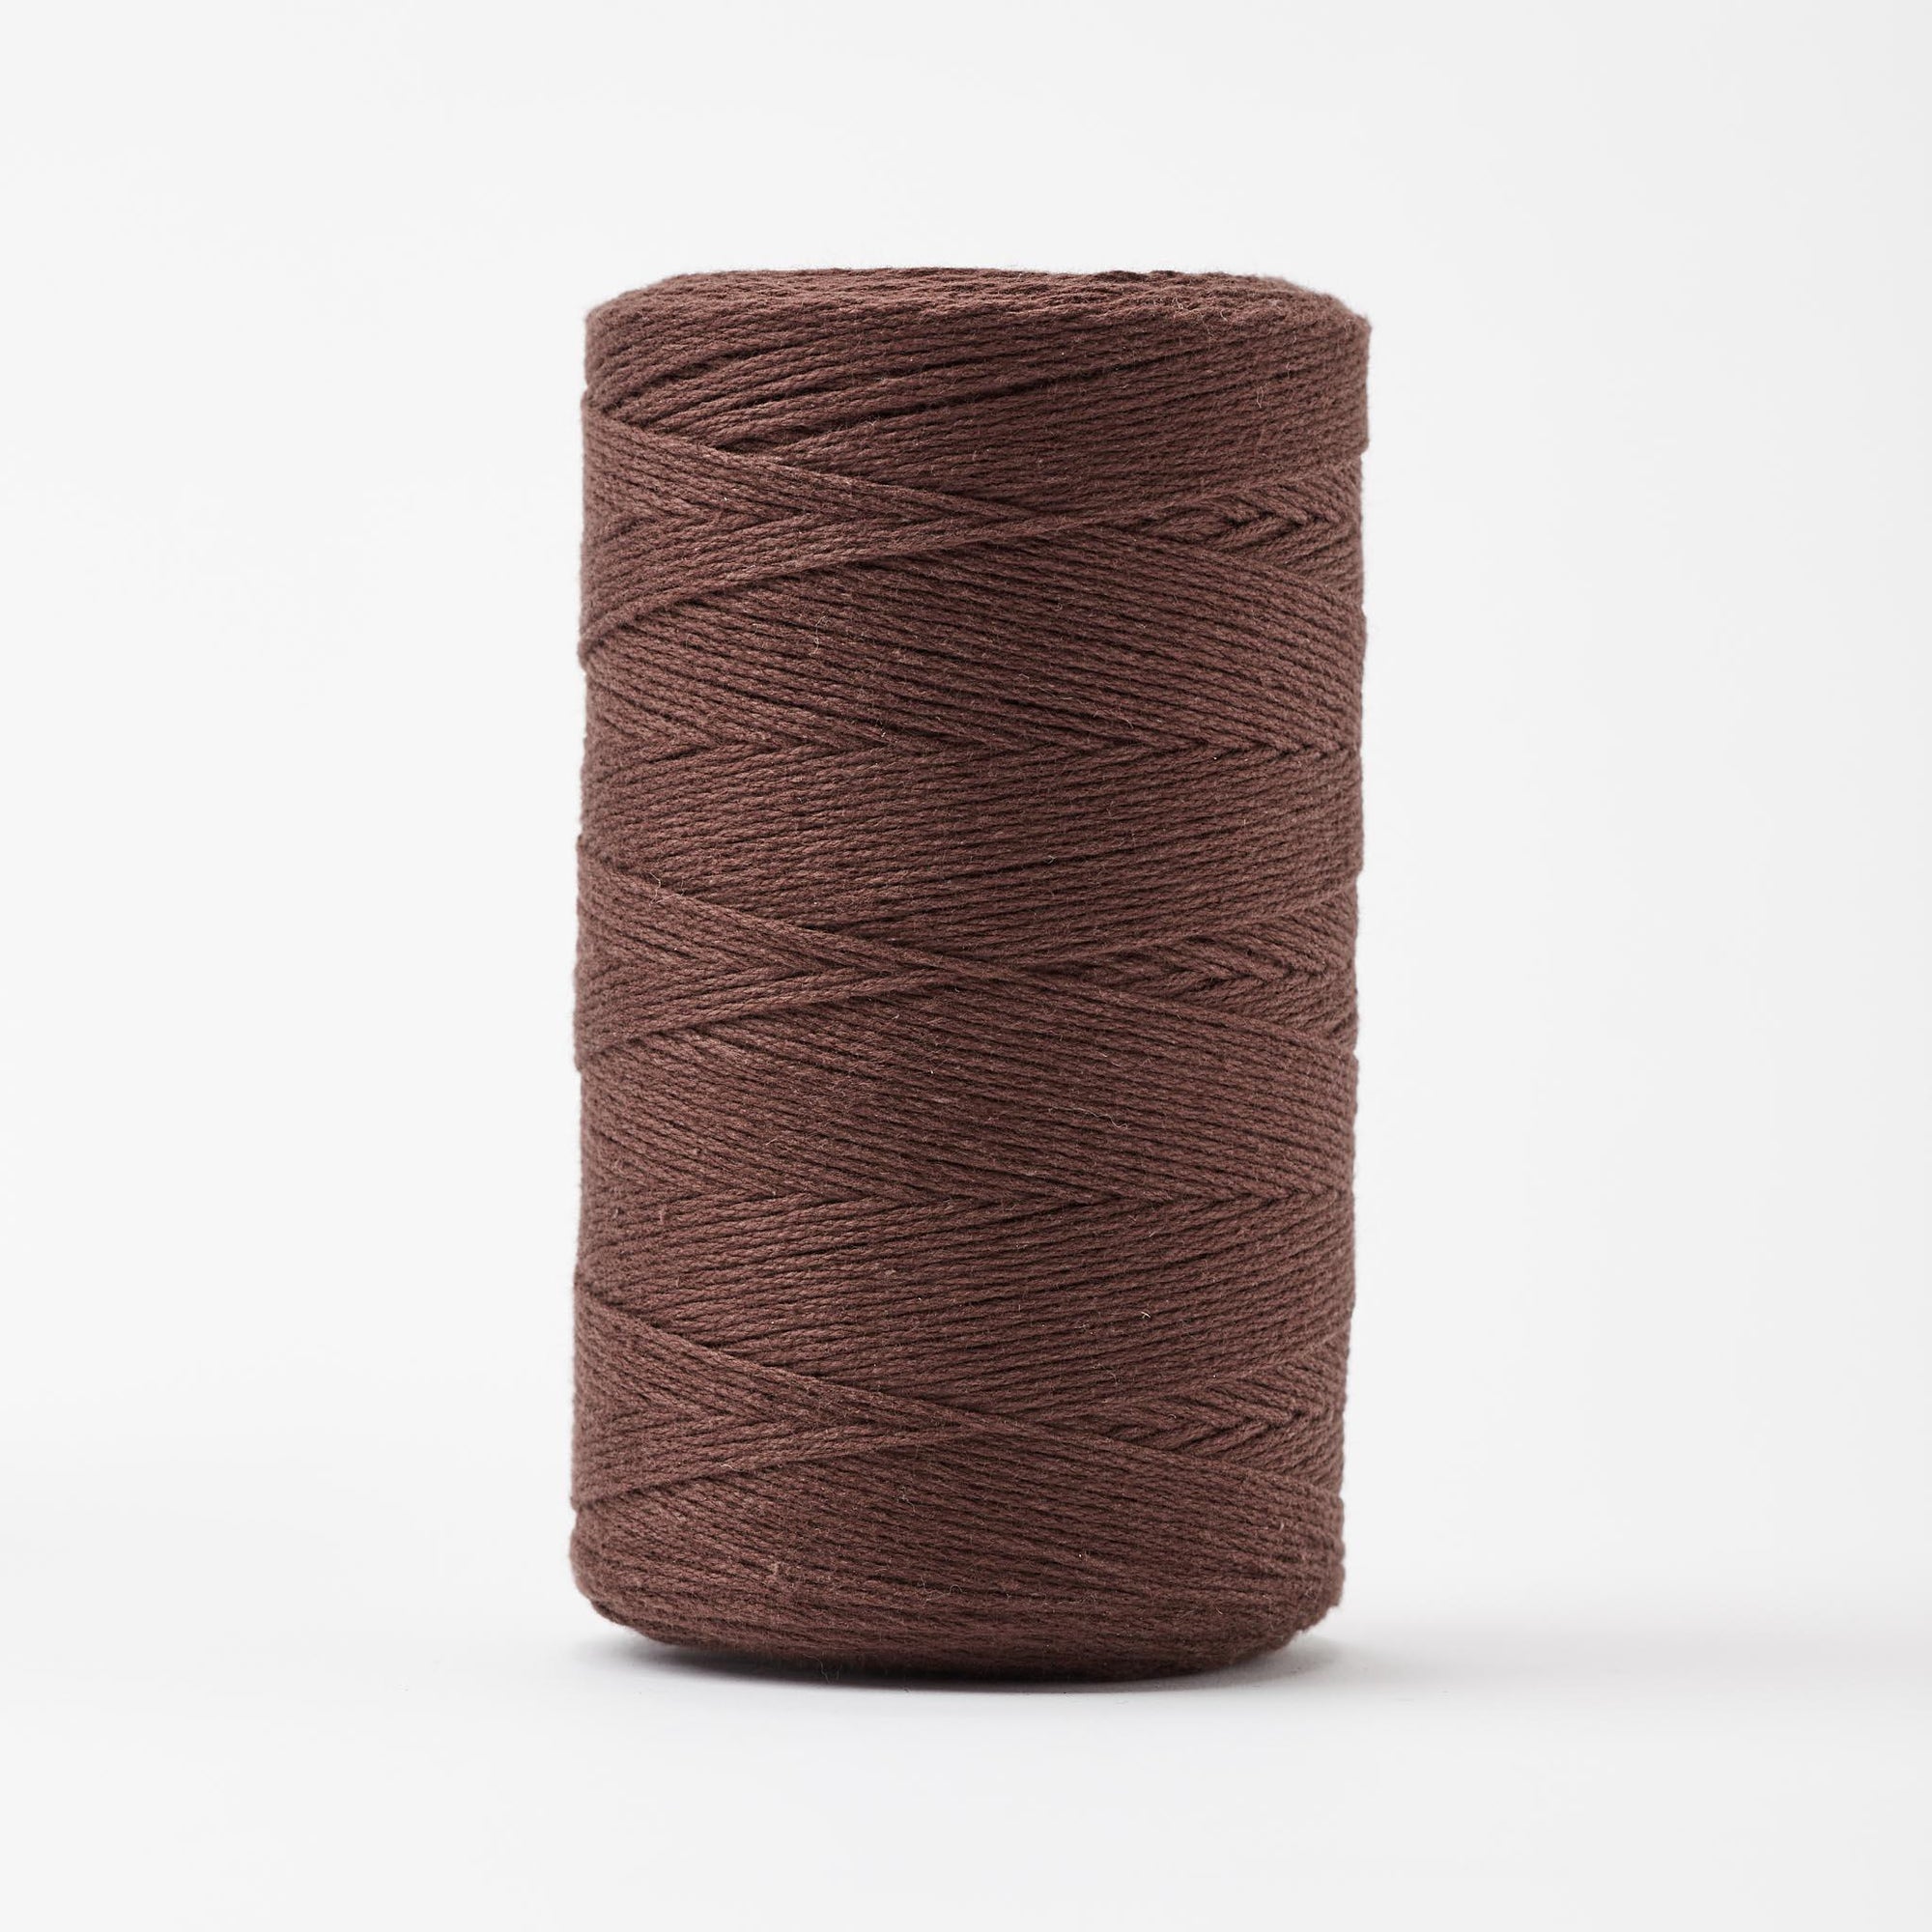 8/8 Un-Mercerized Cotton Weaving Yarn - Gist Yarn